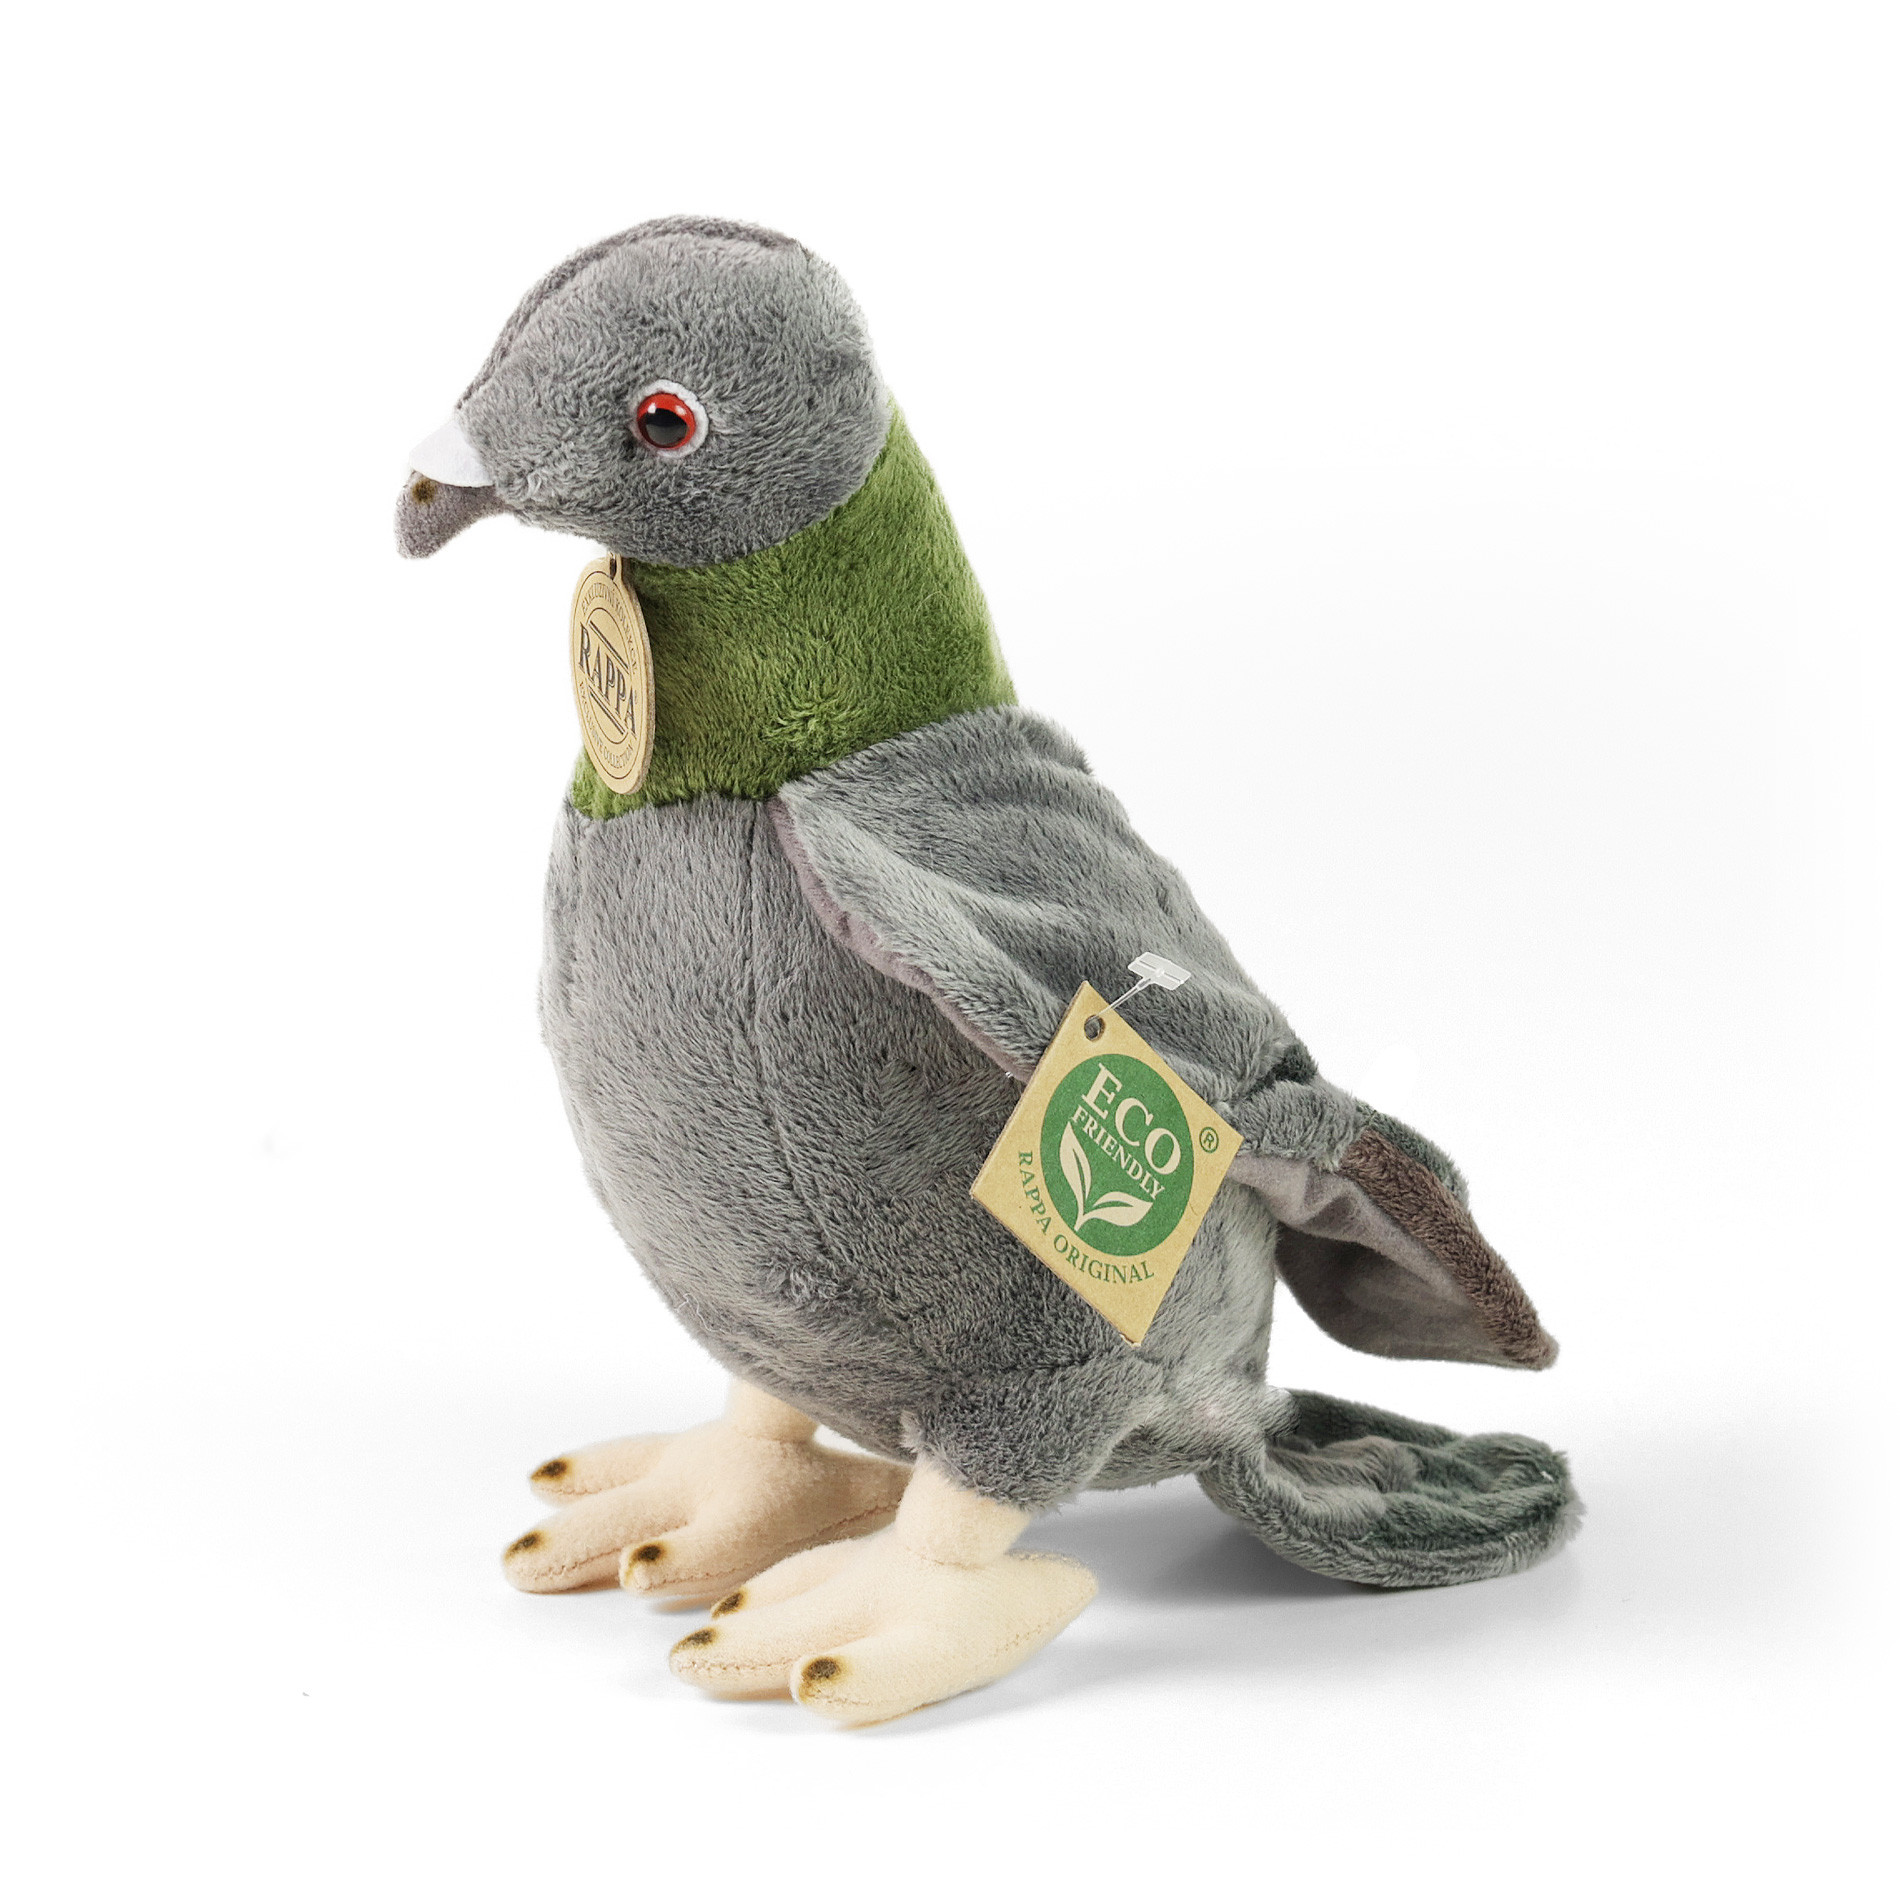 stuffed pigeon toy